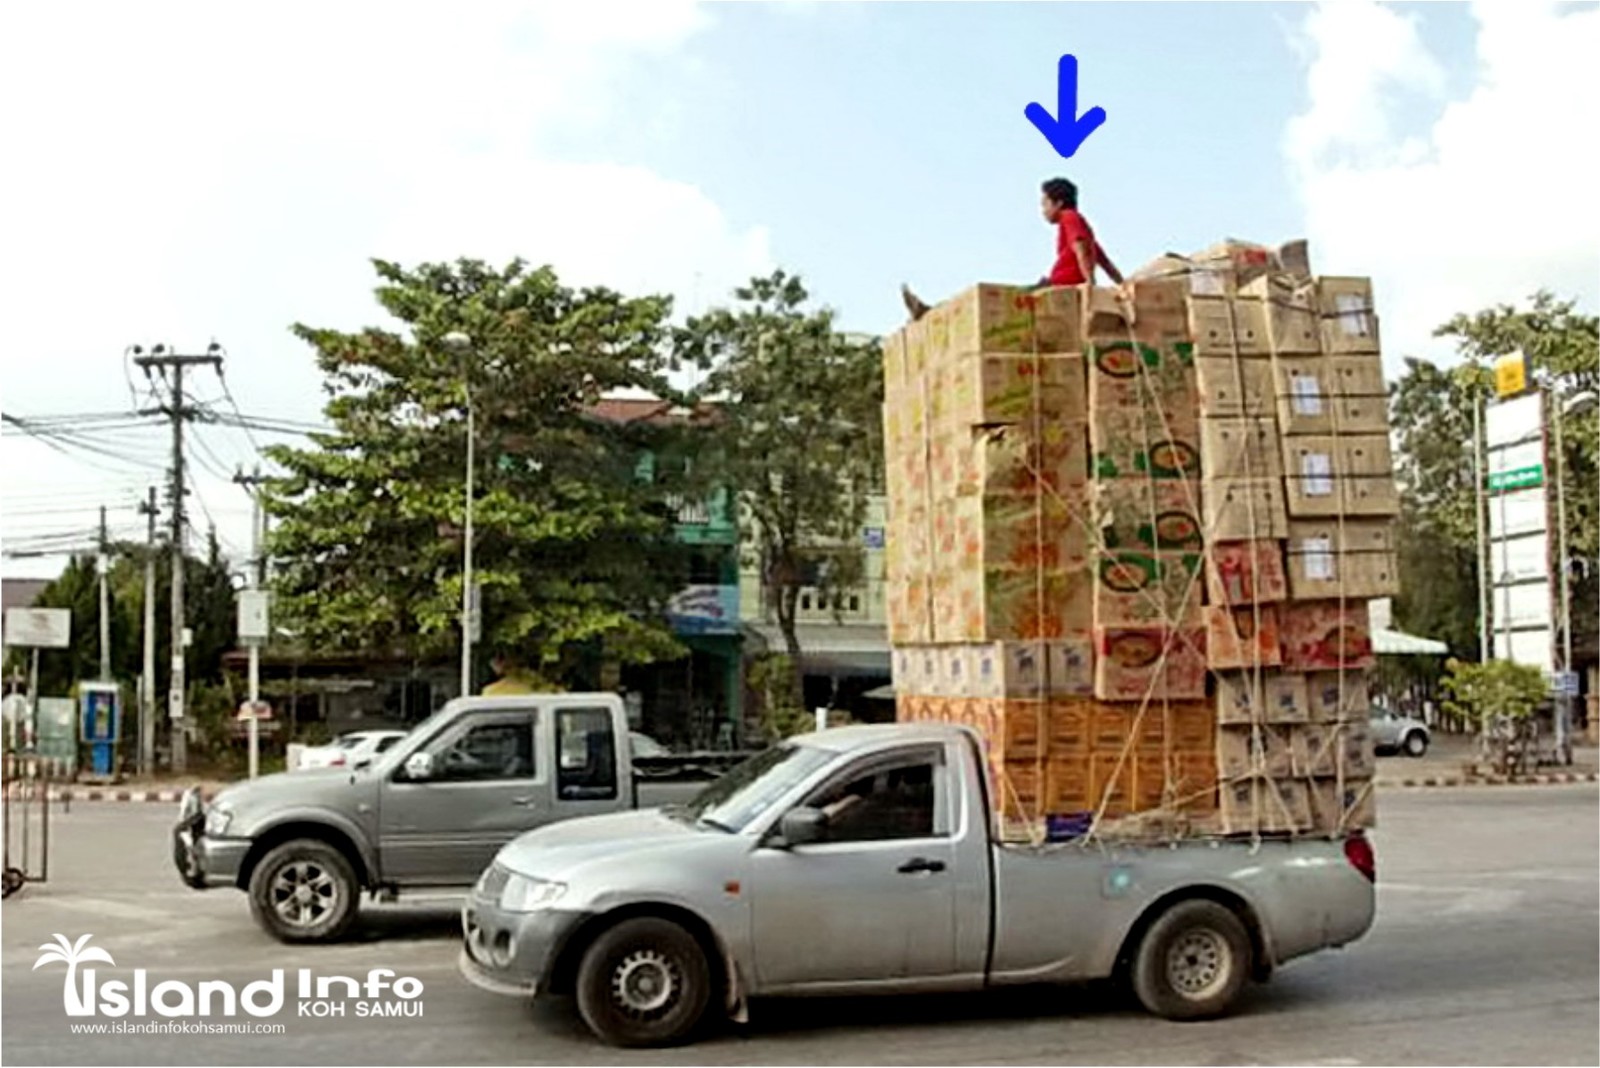 overloaded-driving-cars-motorcycles-vans-trucks-pick-ups-samui-thailand-funny-strange-unusual-8.jpg